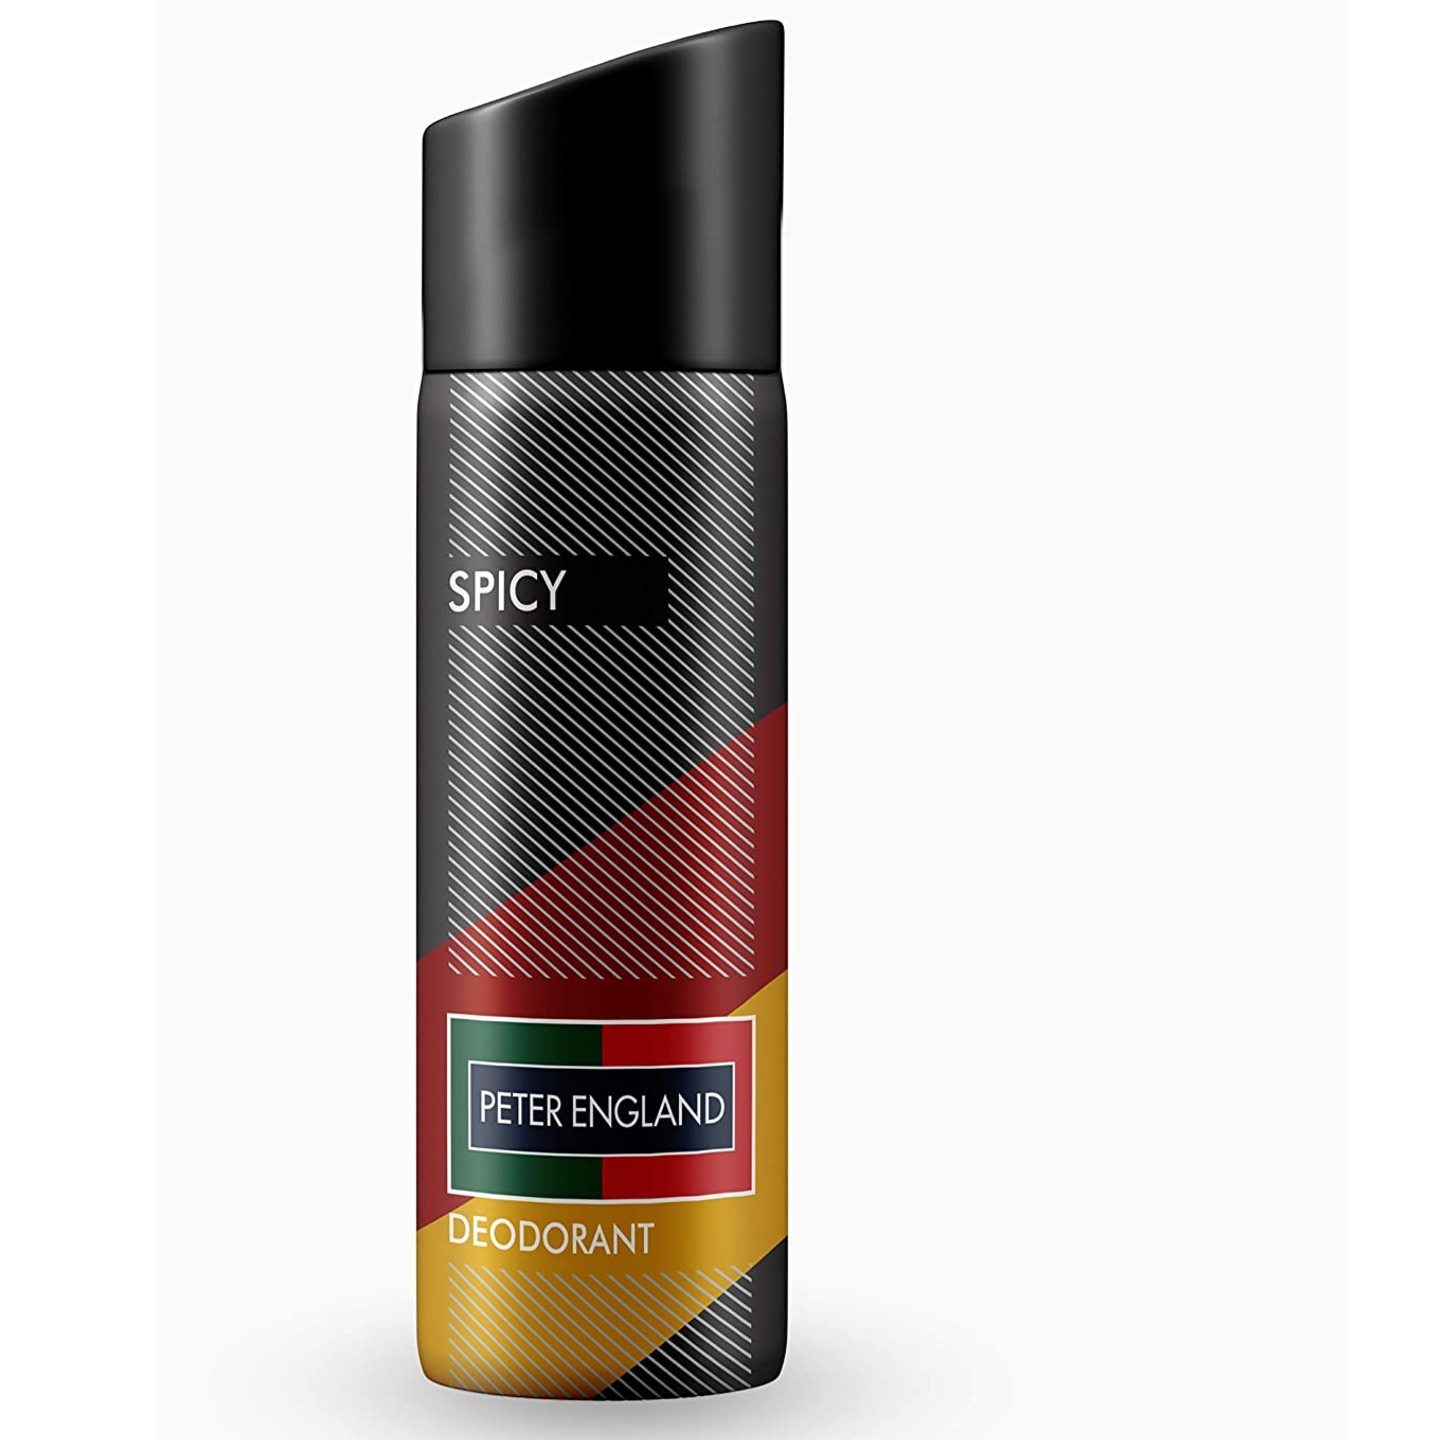 Peter England Spicy Deodorant, 150 ml